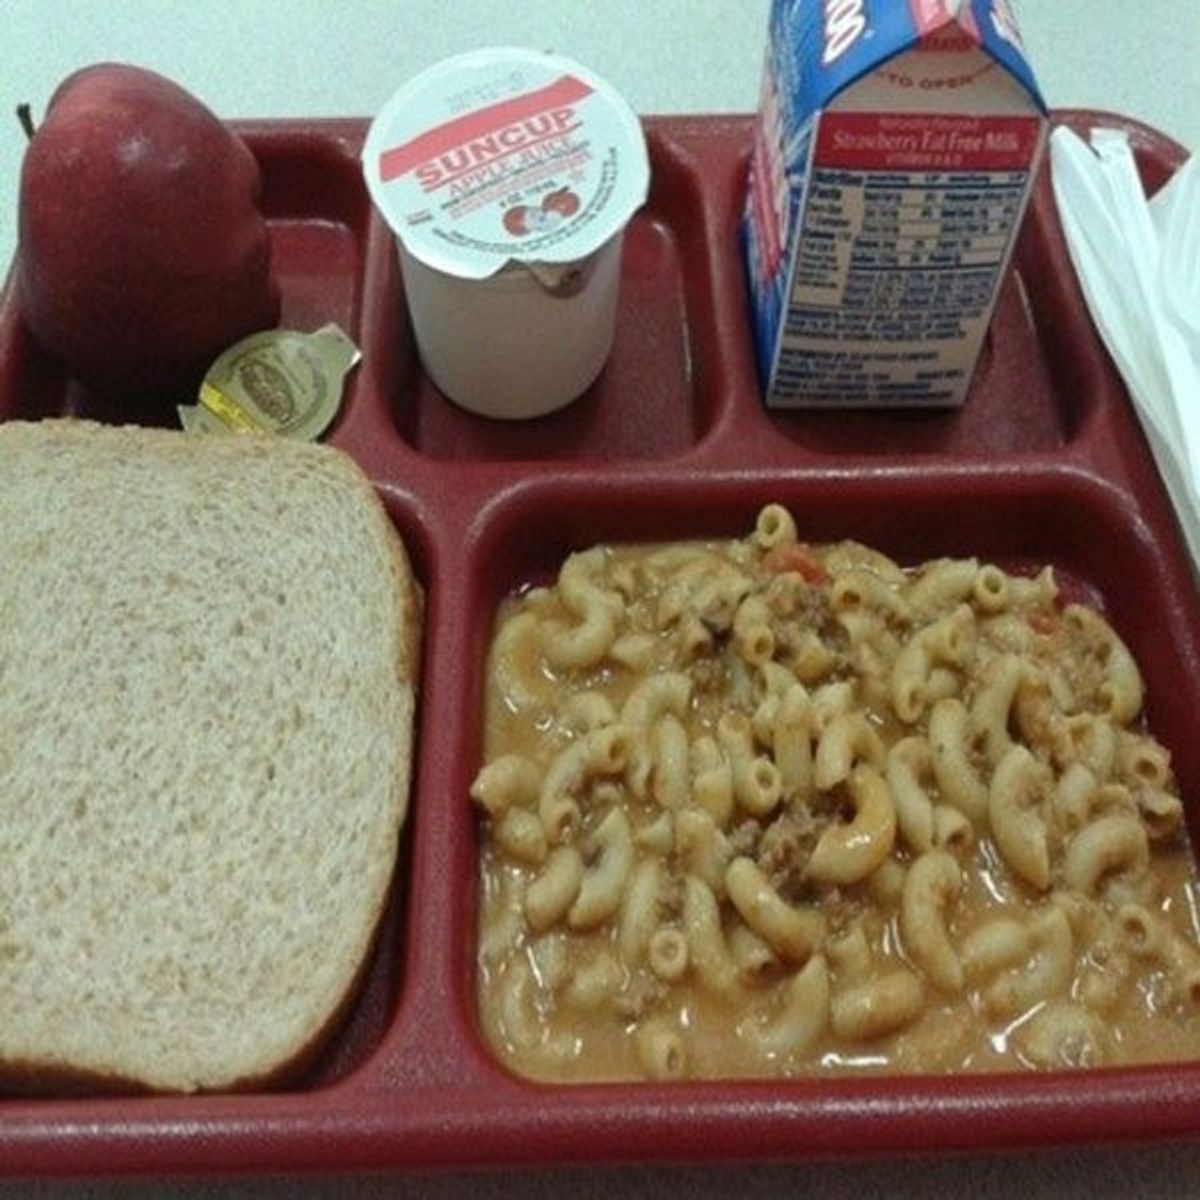 Prison Food VS School Cafeteria Food